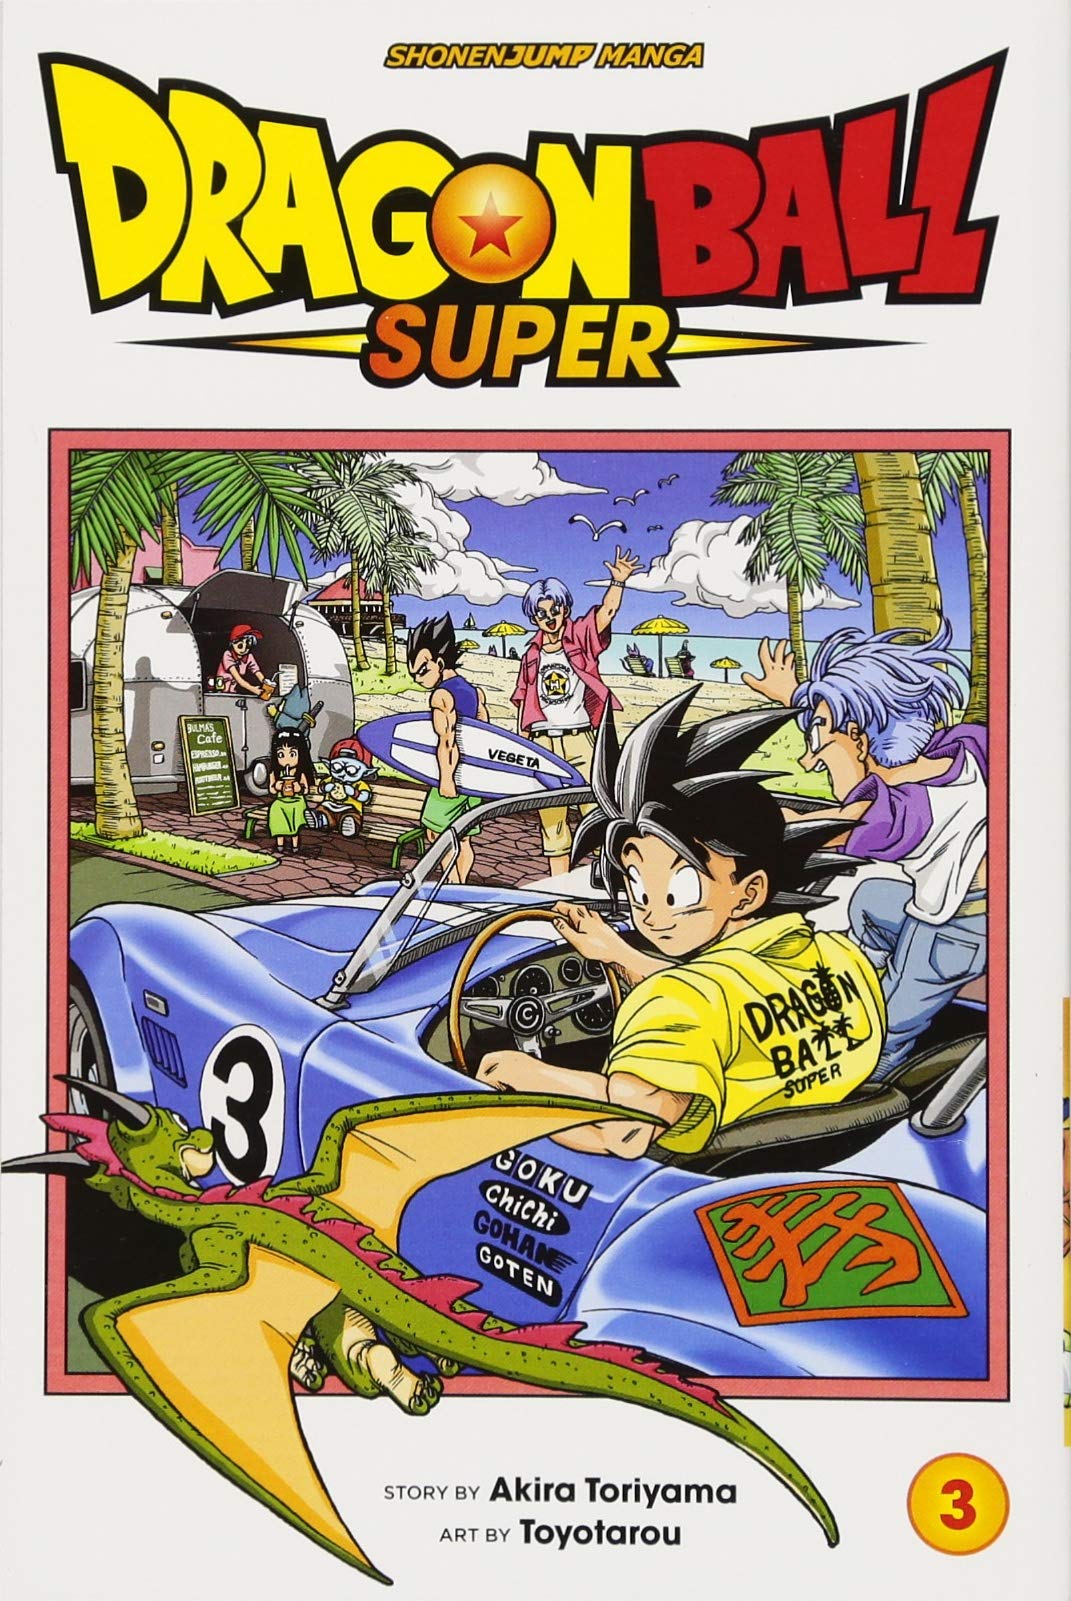 Dragon Ball Super comparte un primer borrador sobre el capítulo 90 del manga